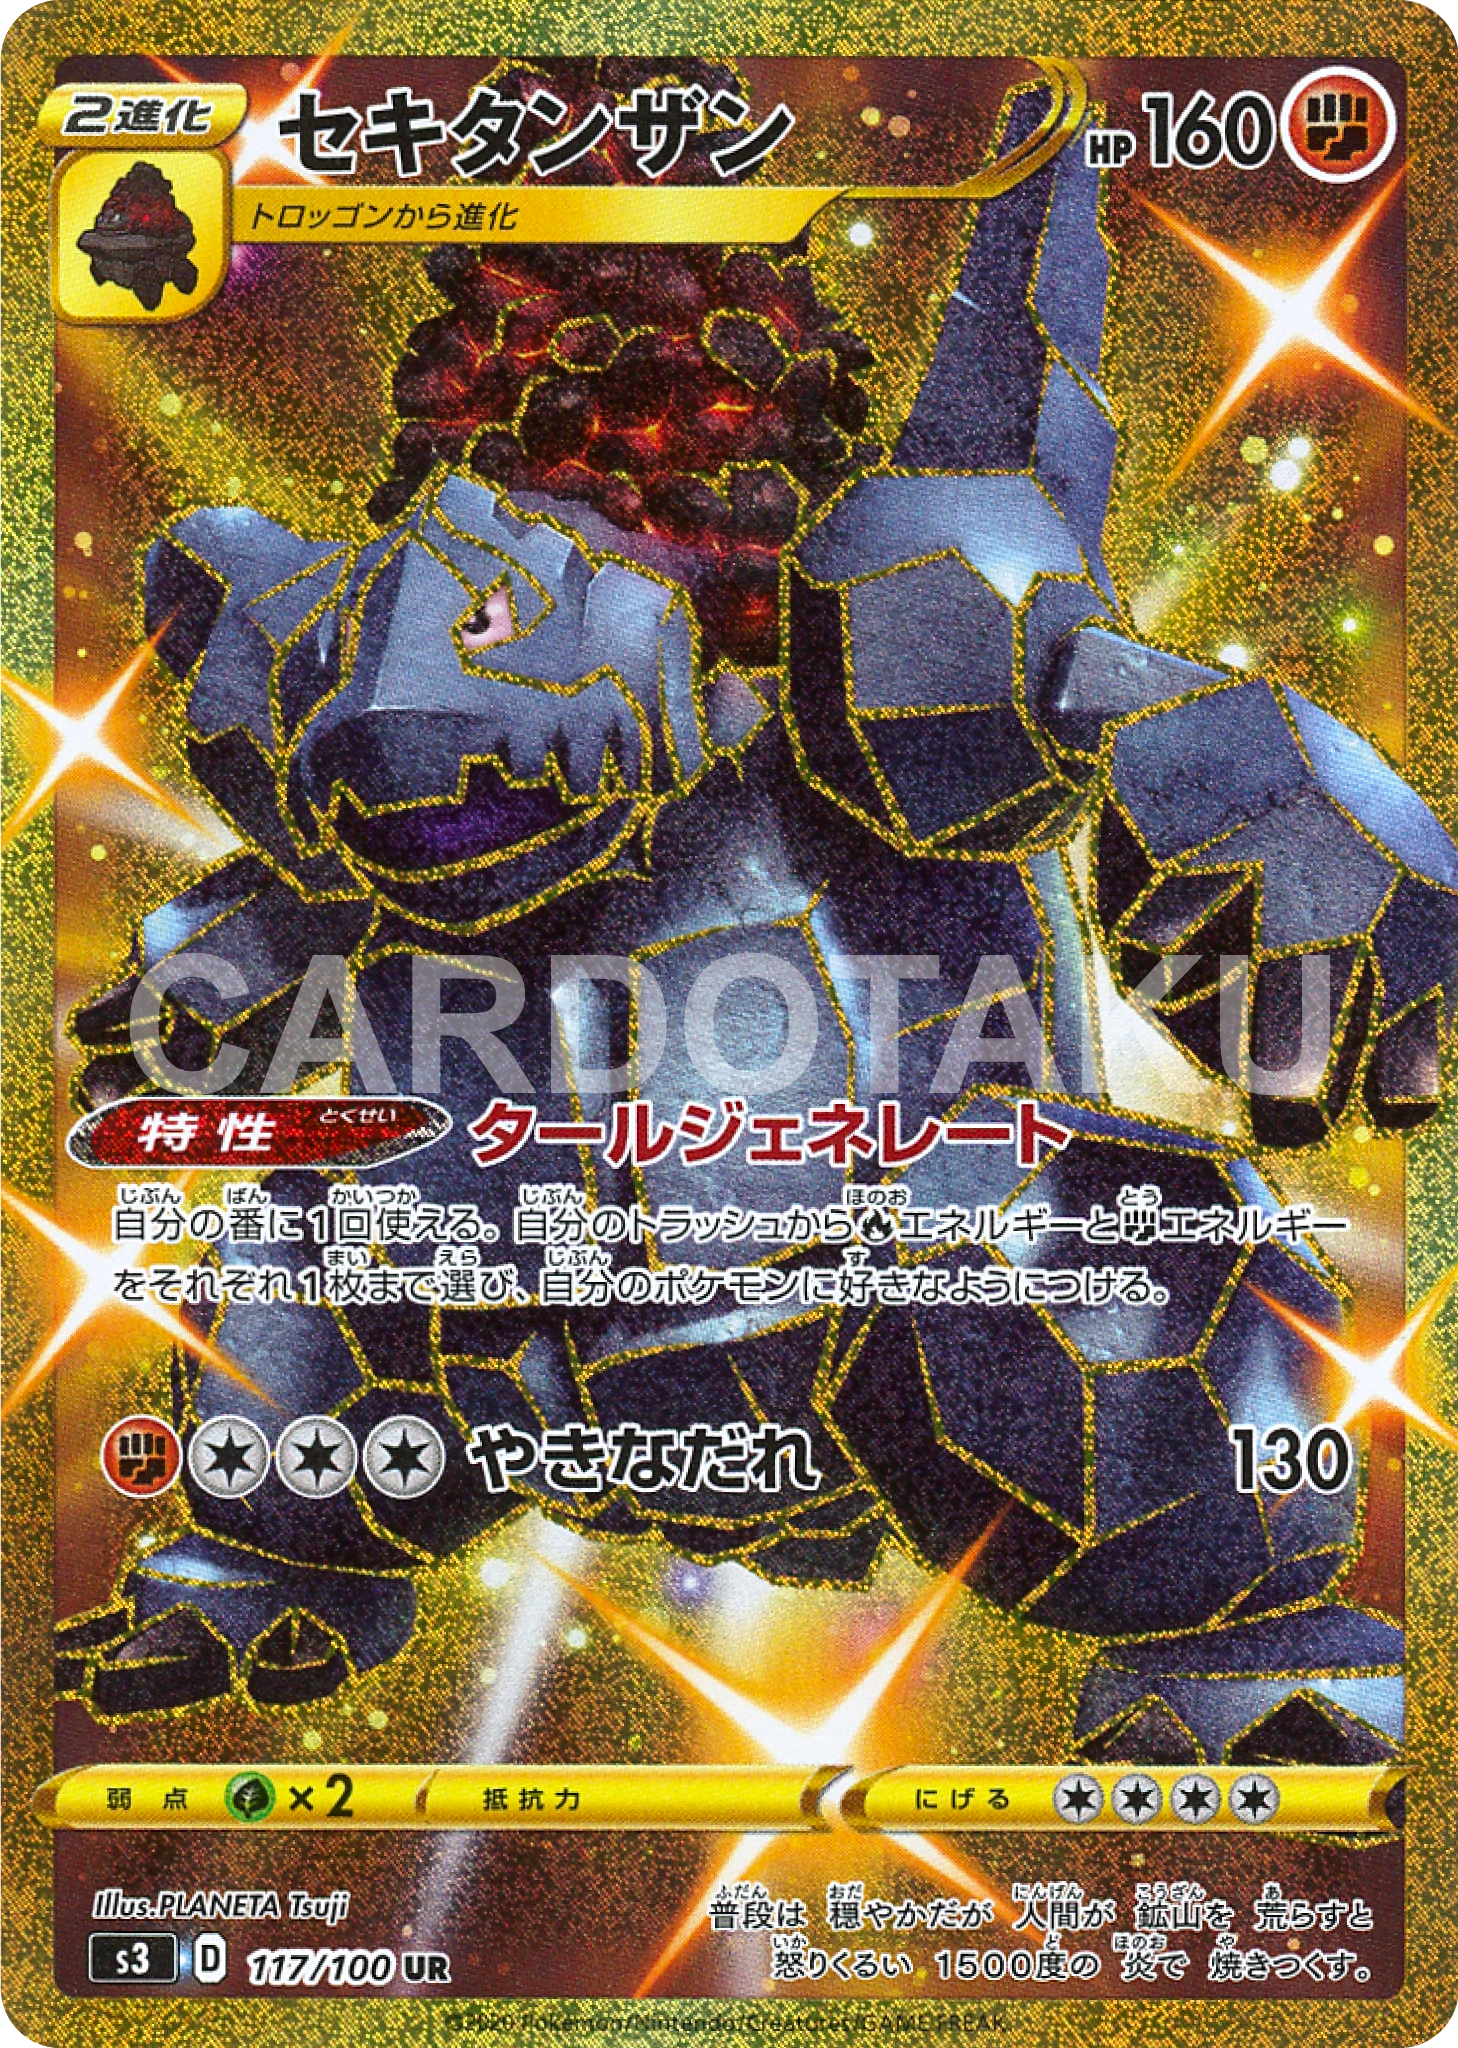 POKÉMON CARD GAME Sword & Shield Expansion pack ｢Infinity Zone｣  POKÉMON CARD GAME S3 117/100 Ultra Rare card  Coalossal